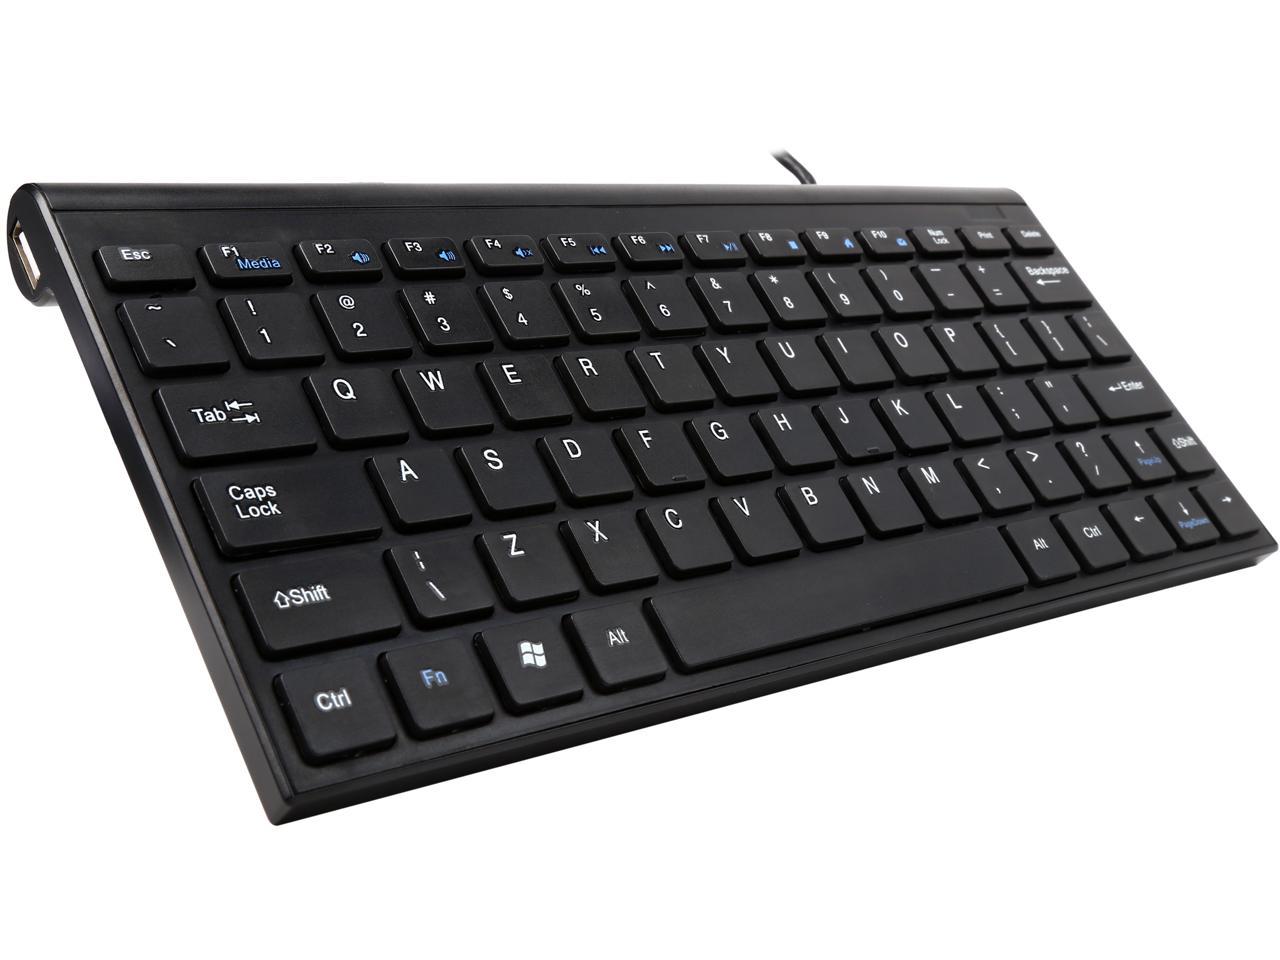 BYTECC KB-97 Black Wired Keyboard - Newegg.com